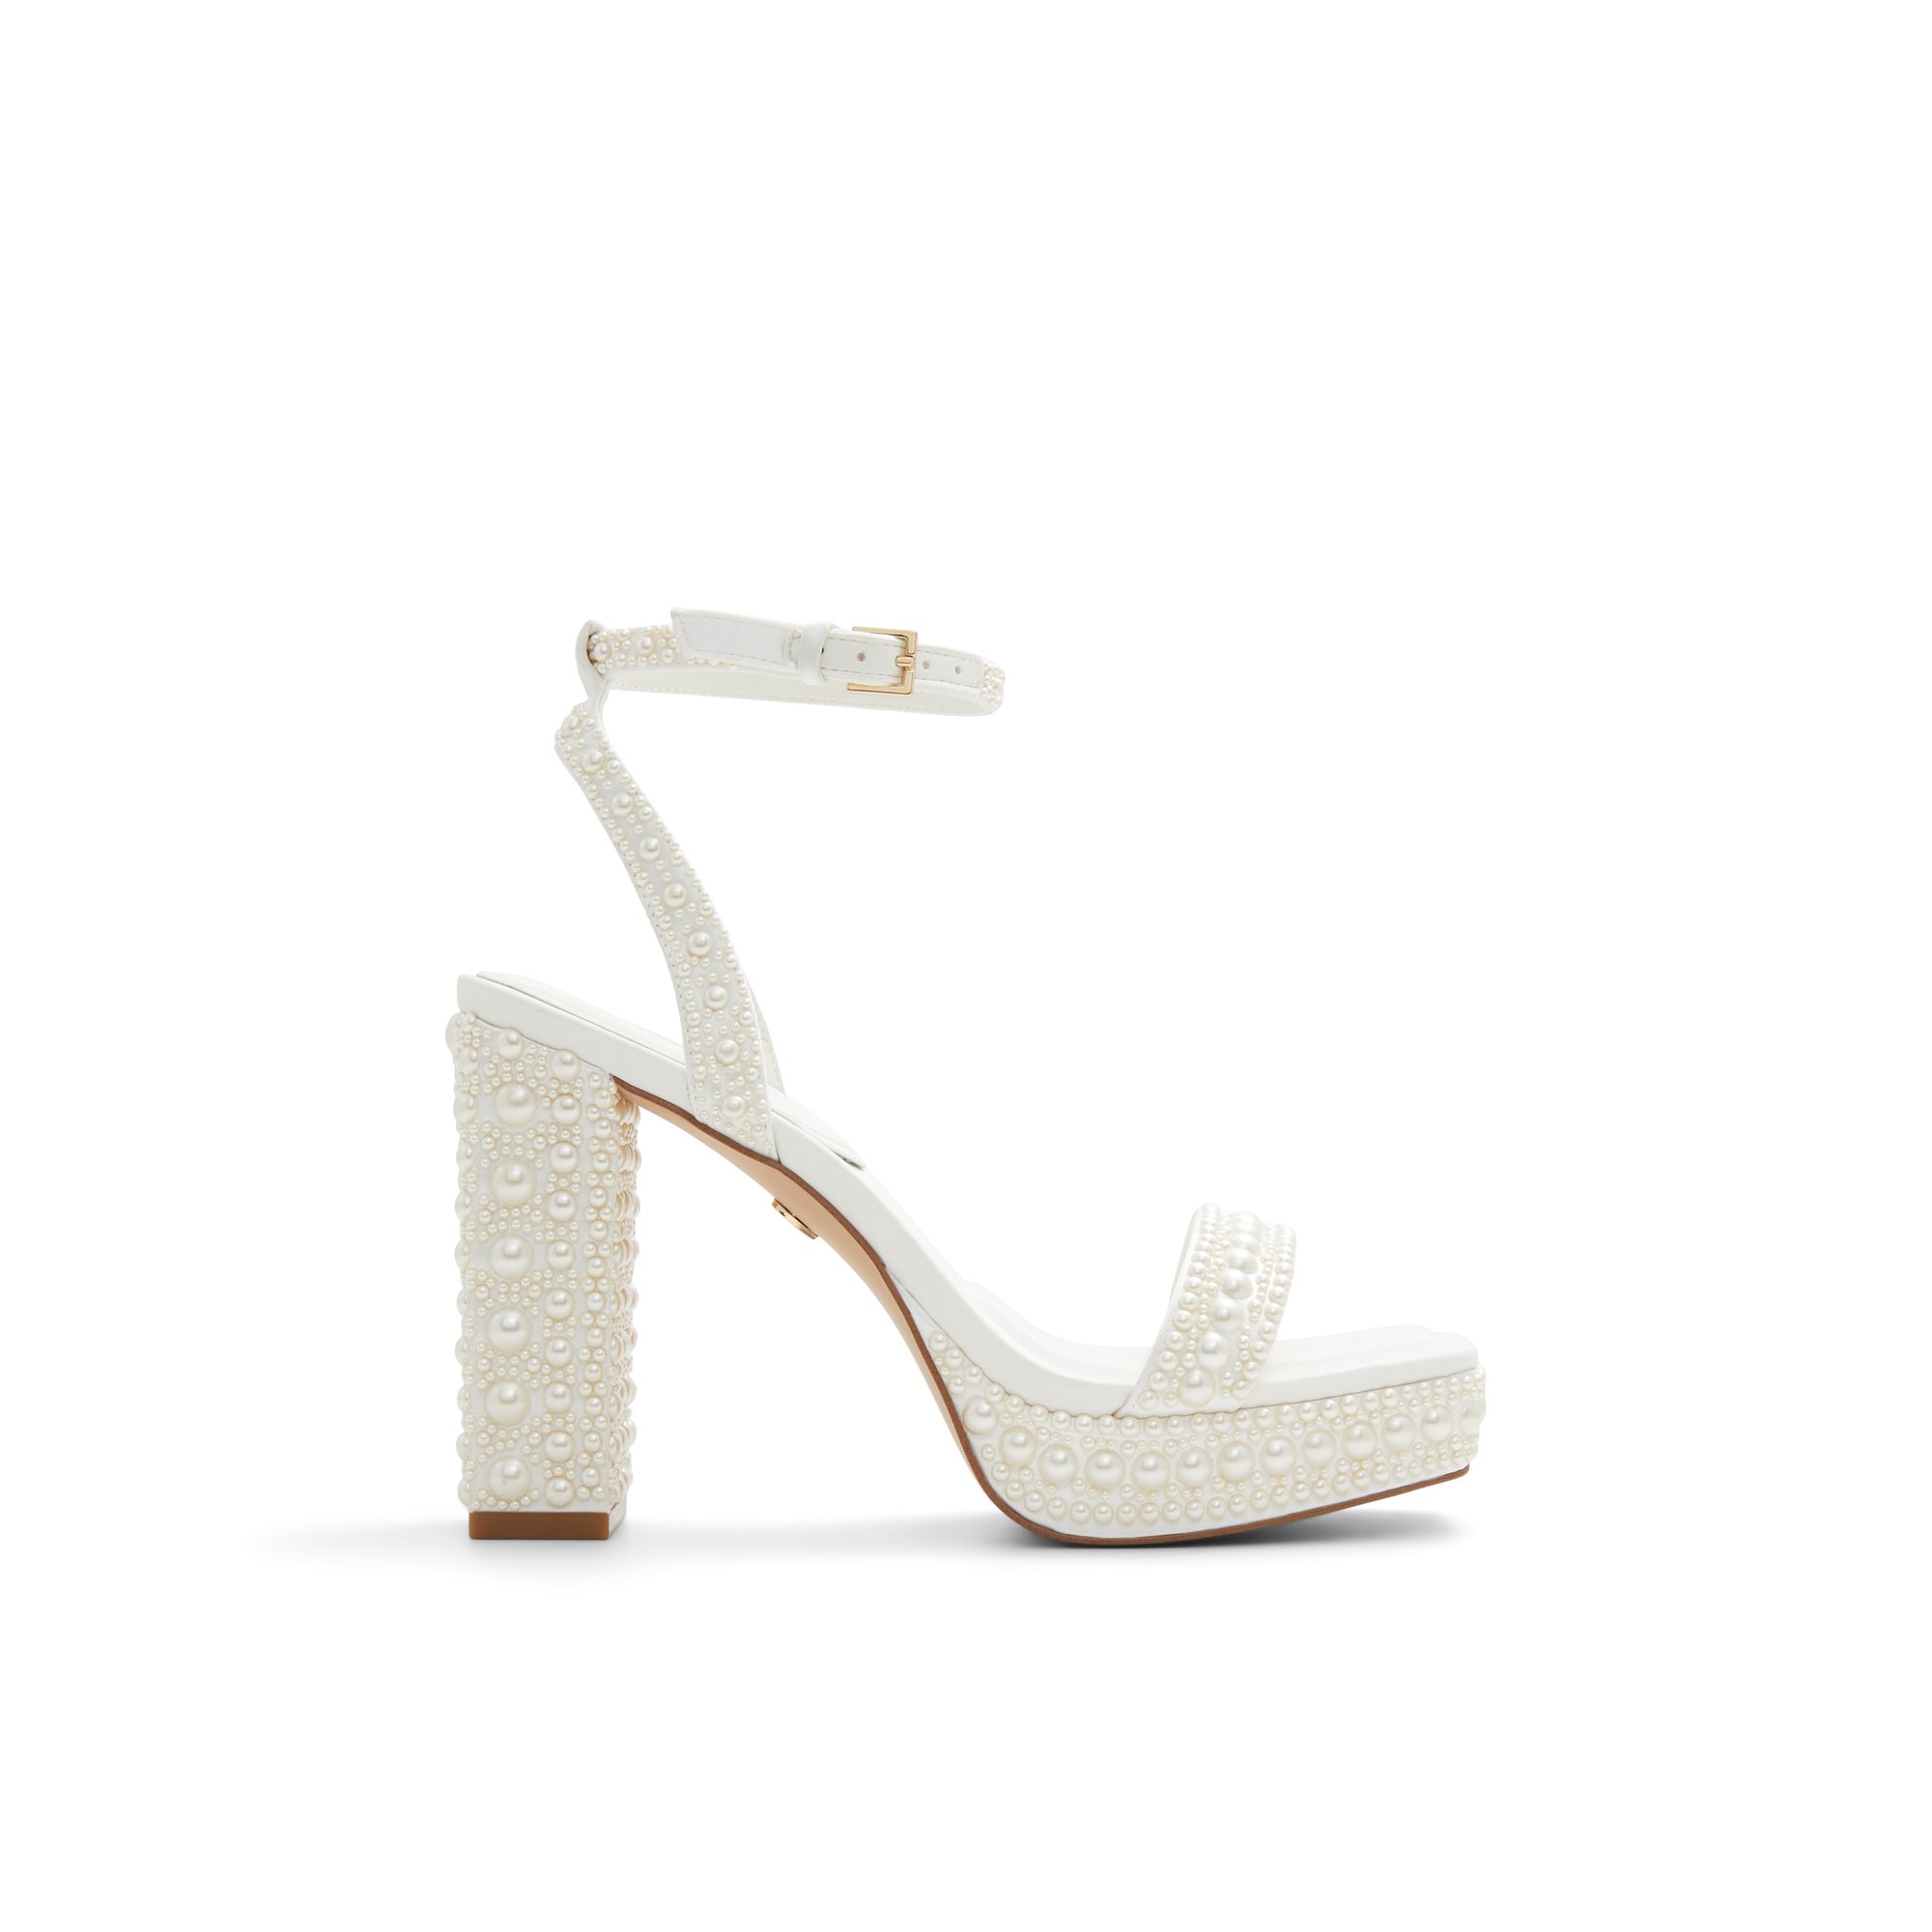 ALDO Lulu - Women's Strappy Sandal Sandals - White